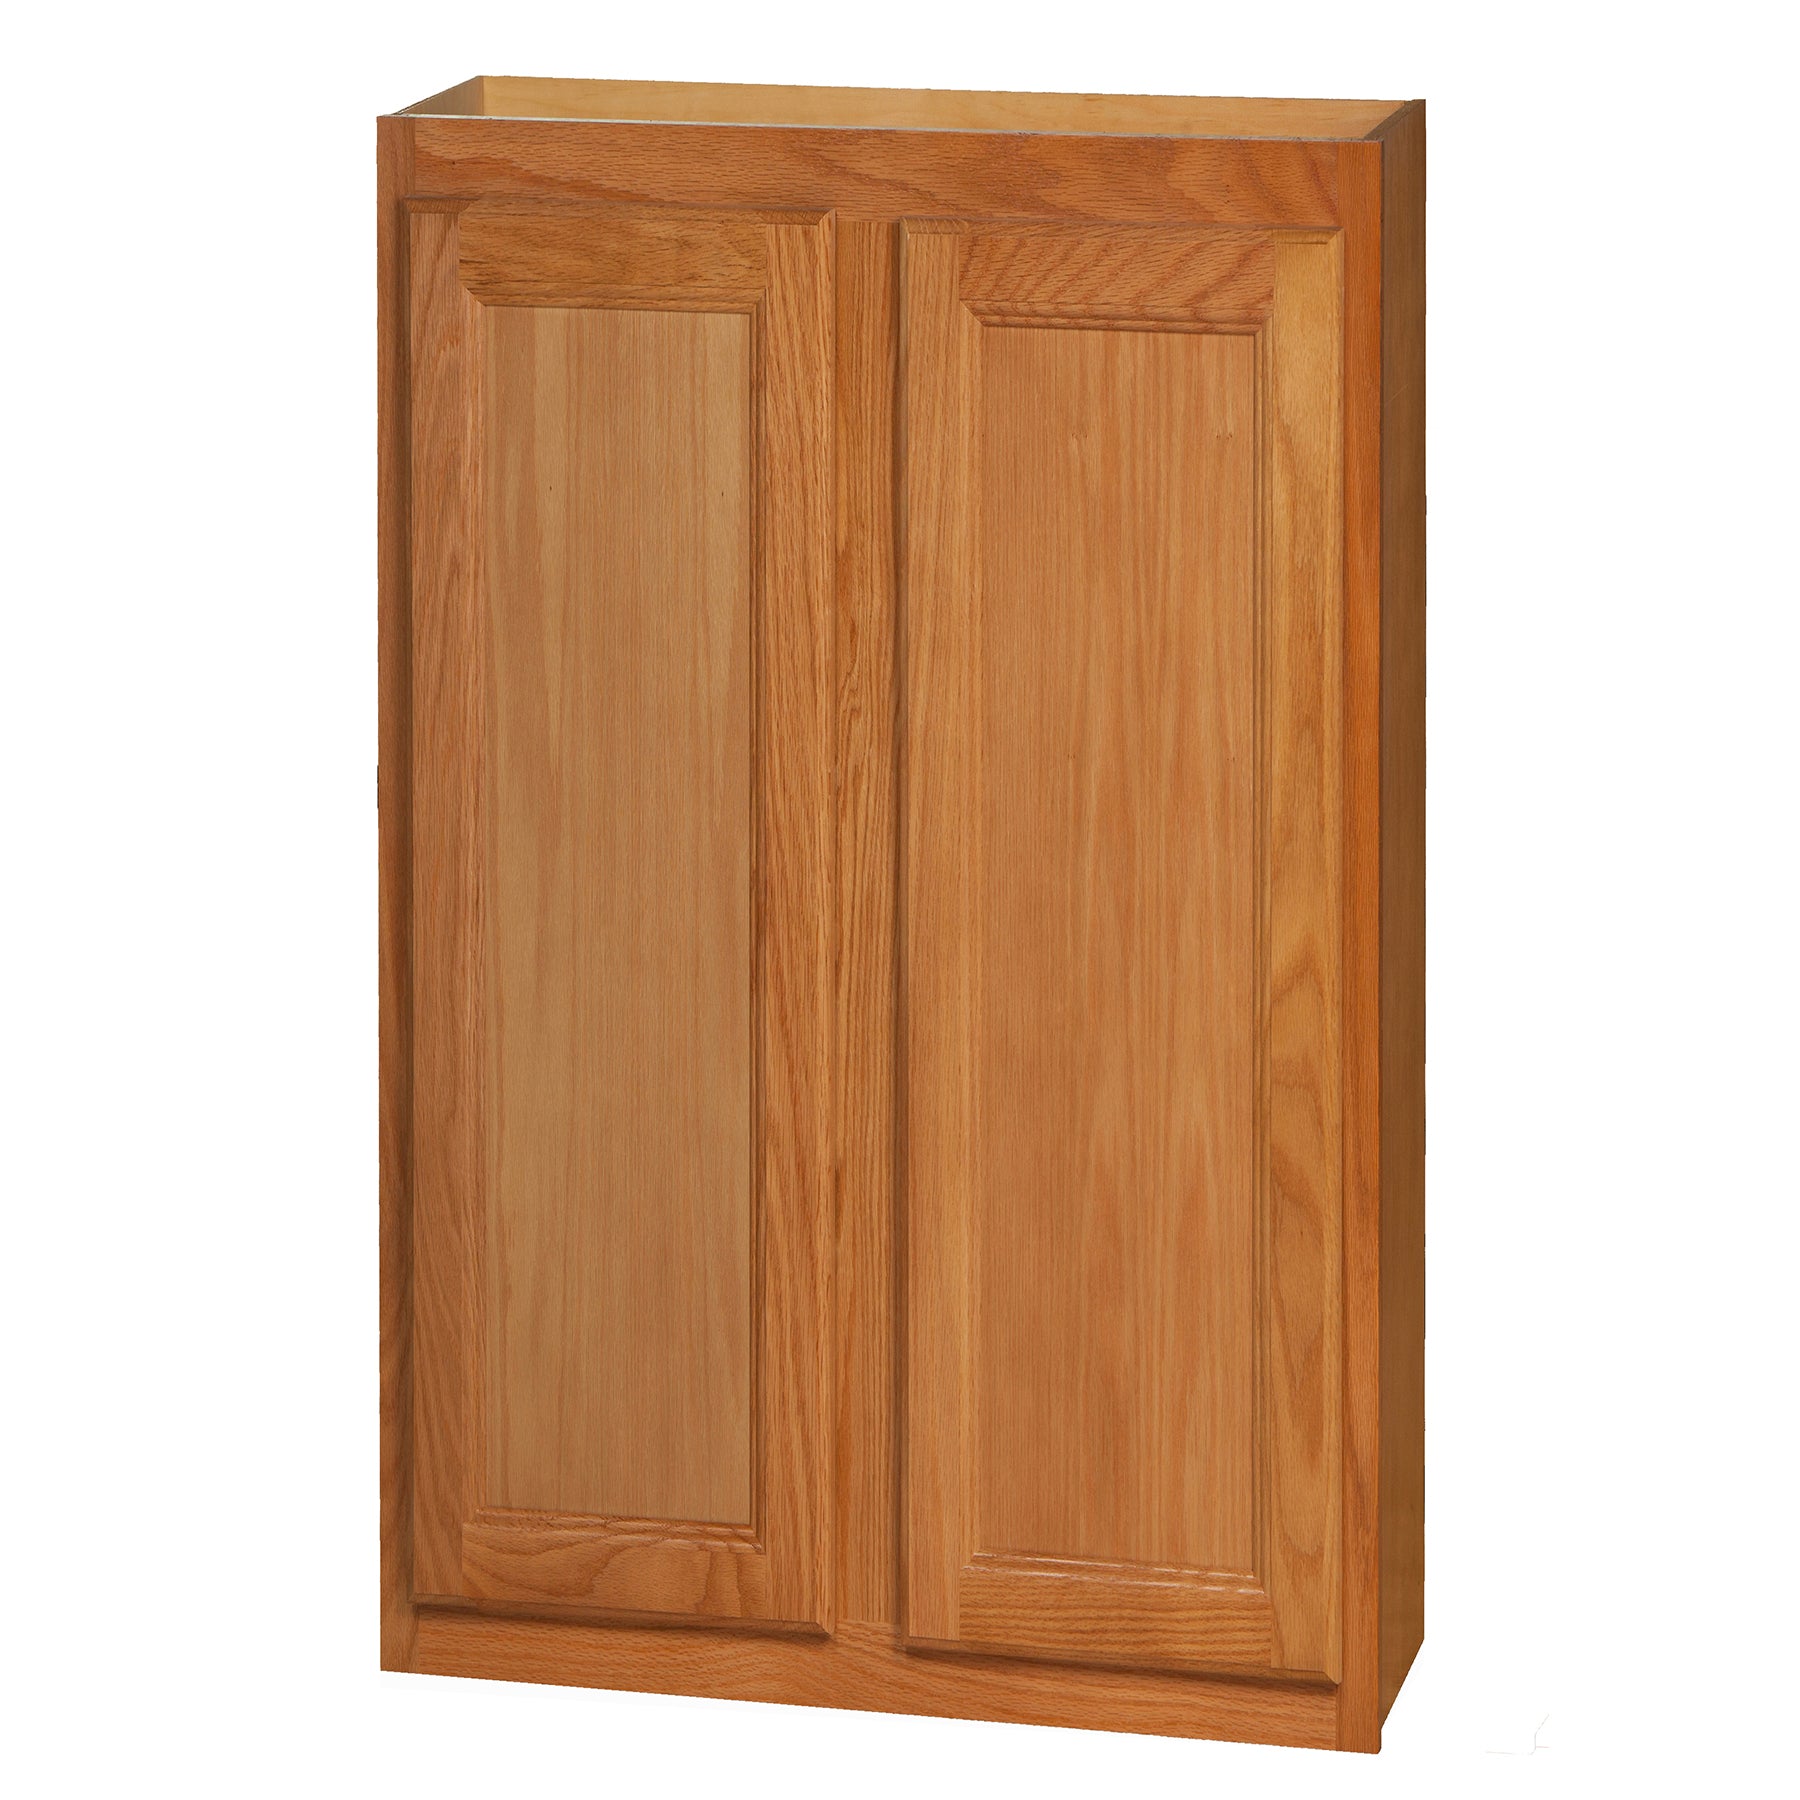 36 inch Wall Cabinets - Chadwood Shaker - 27 Inch W x 36 Inch H x 12 Inch D